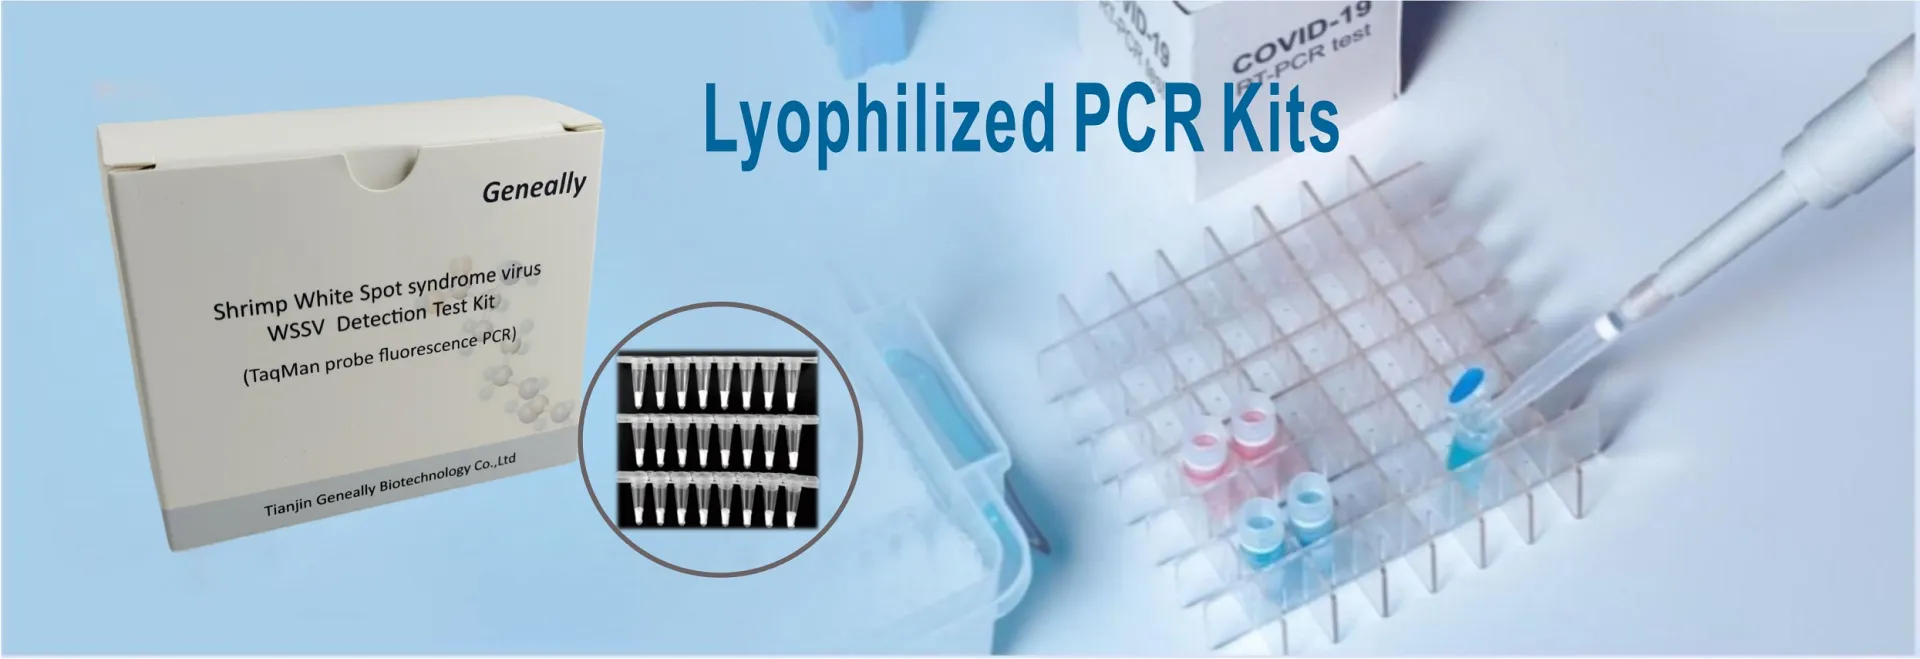 Lyophilized PCR Kits